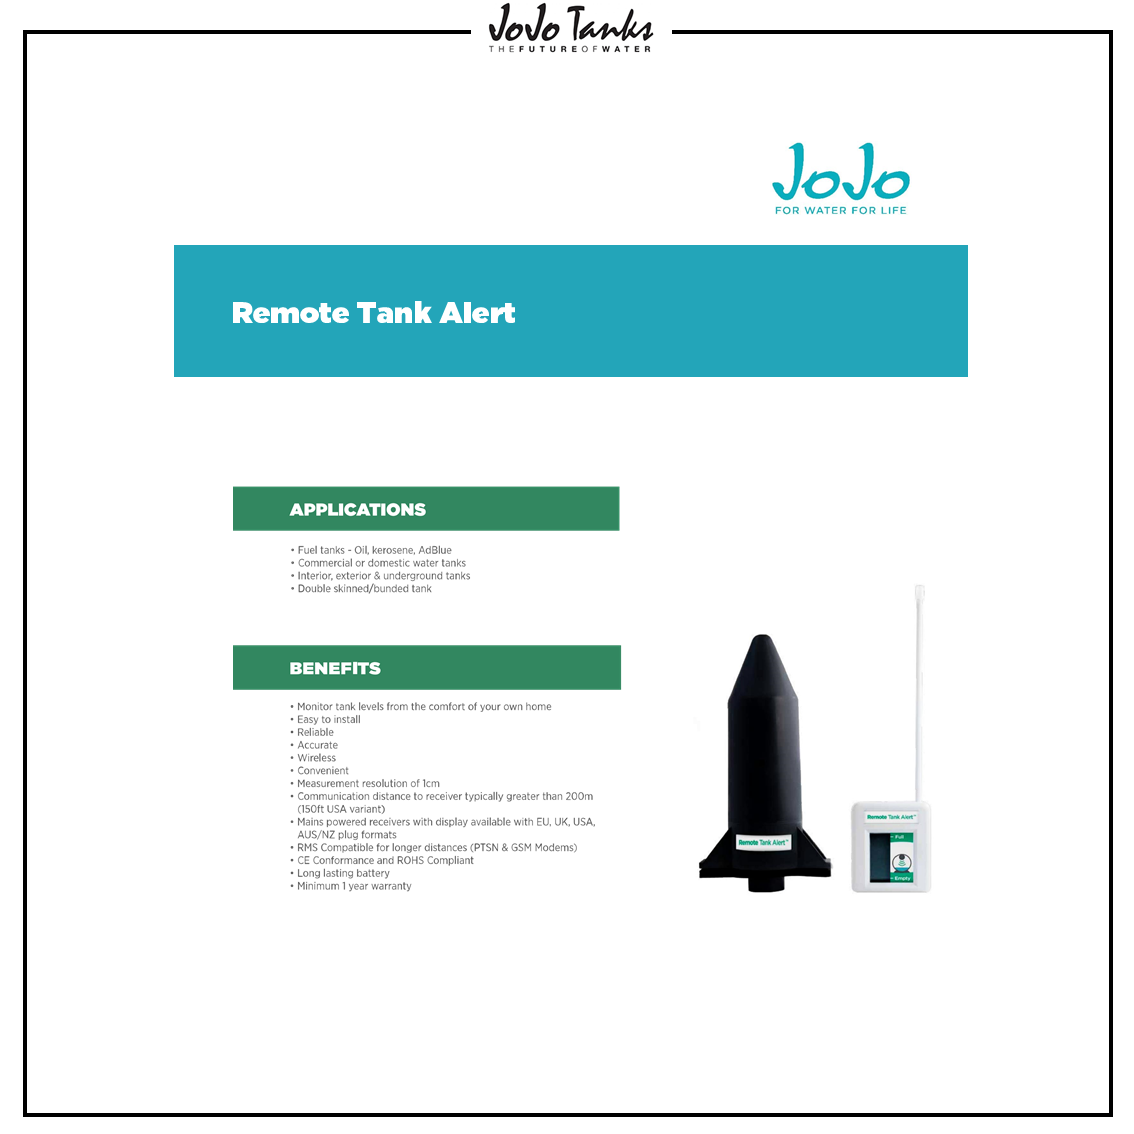 JOJO - Leaflets-Remote-Tank-Alert Catalogue